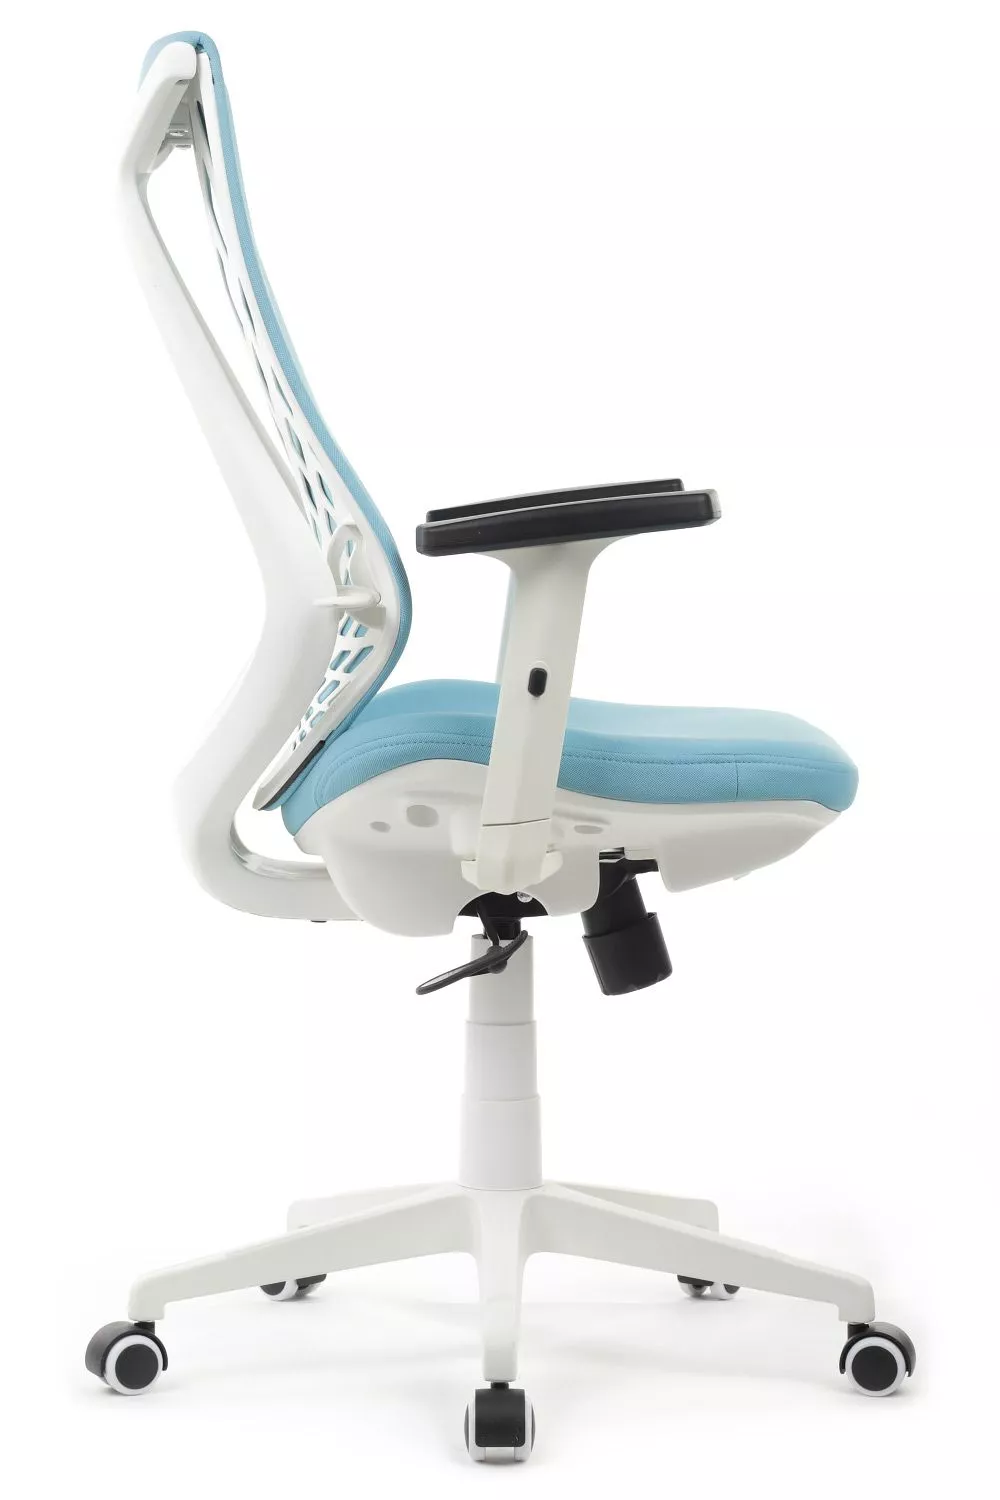 Кресло RIVA DESIGN Xpress CX1361М голубой / белый каркас